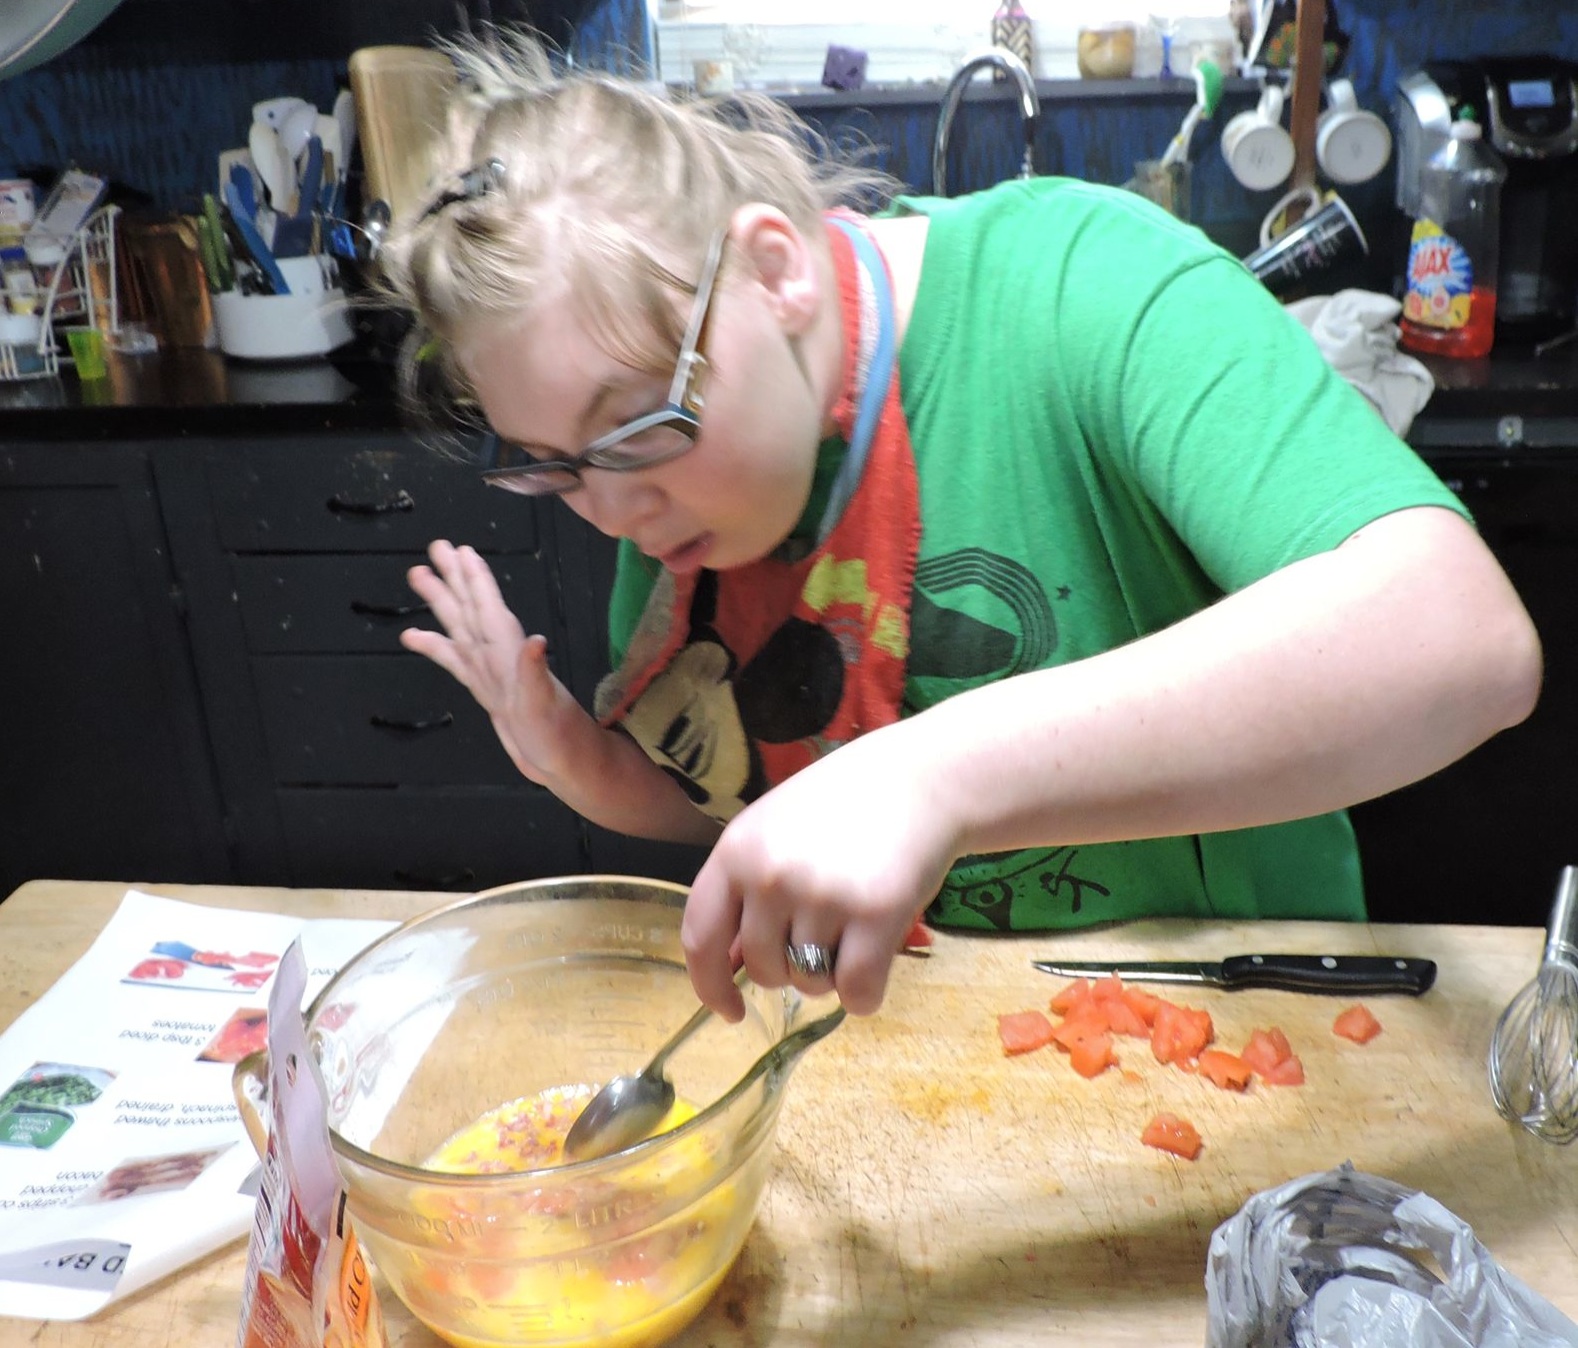 Kids In The Kitchen Educational Activities Cookbook